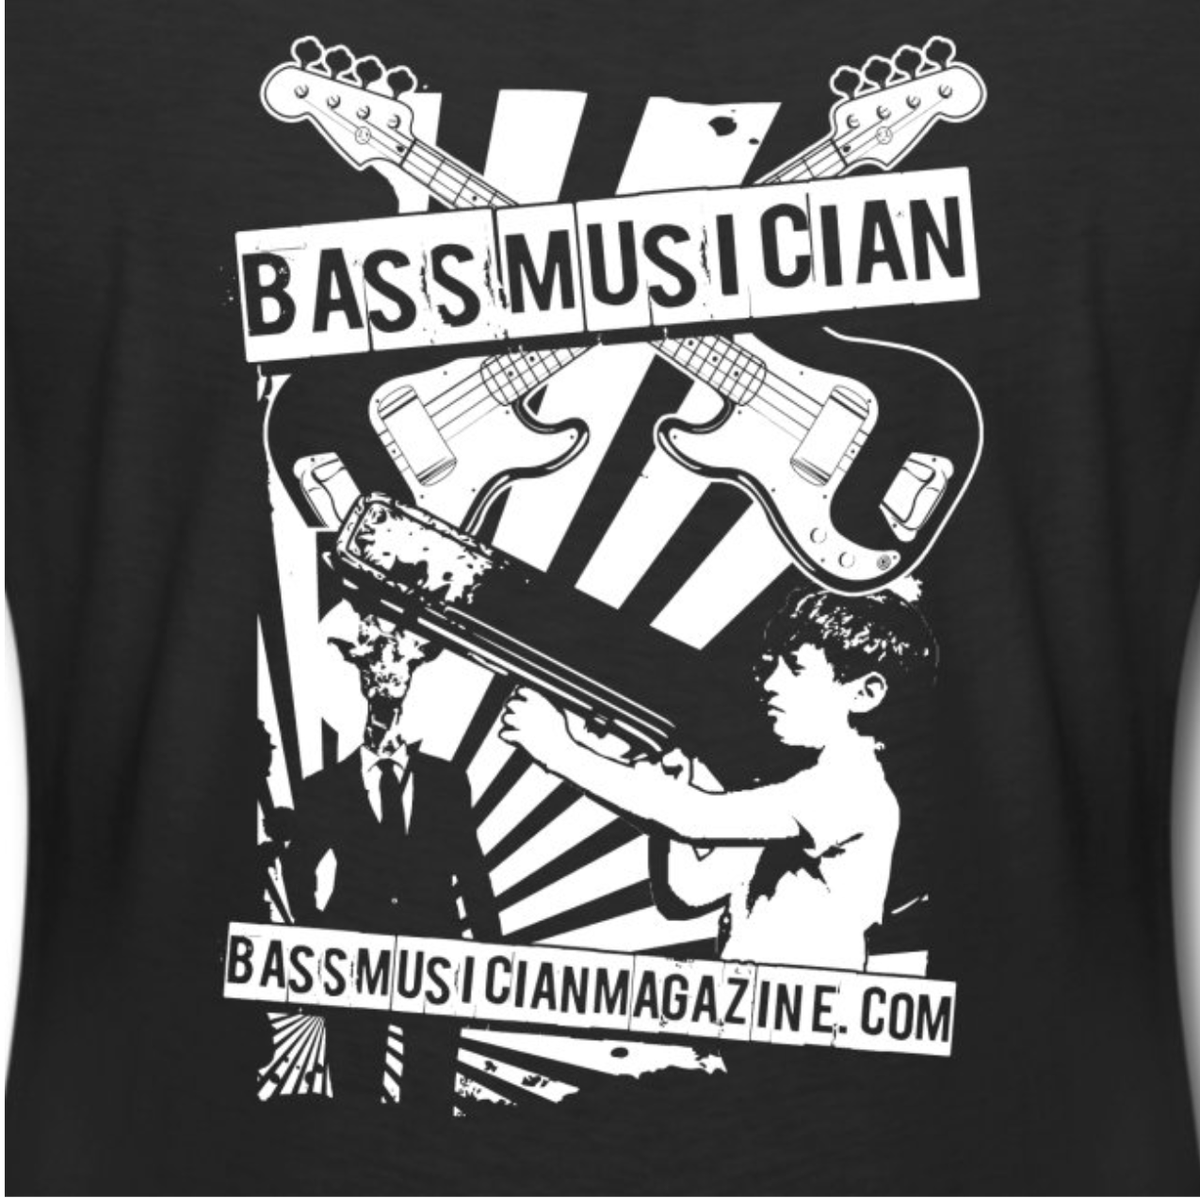 Bad Ass Bass Women's Premium T-Shirt Sizes S-3XL loom.ly/Y7WCPkQ #bassmusicianmag #bassmusician #bassplayer #bassguitarist #electricbassist #bassguitars #bassguitar #electricbass #bassist #bass #bassporn #bajo #baixo #baixos #bassline #ad